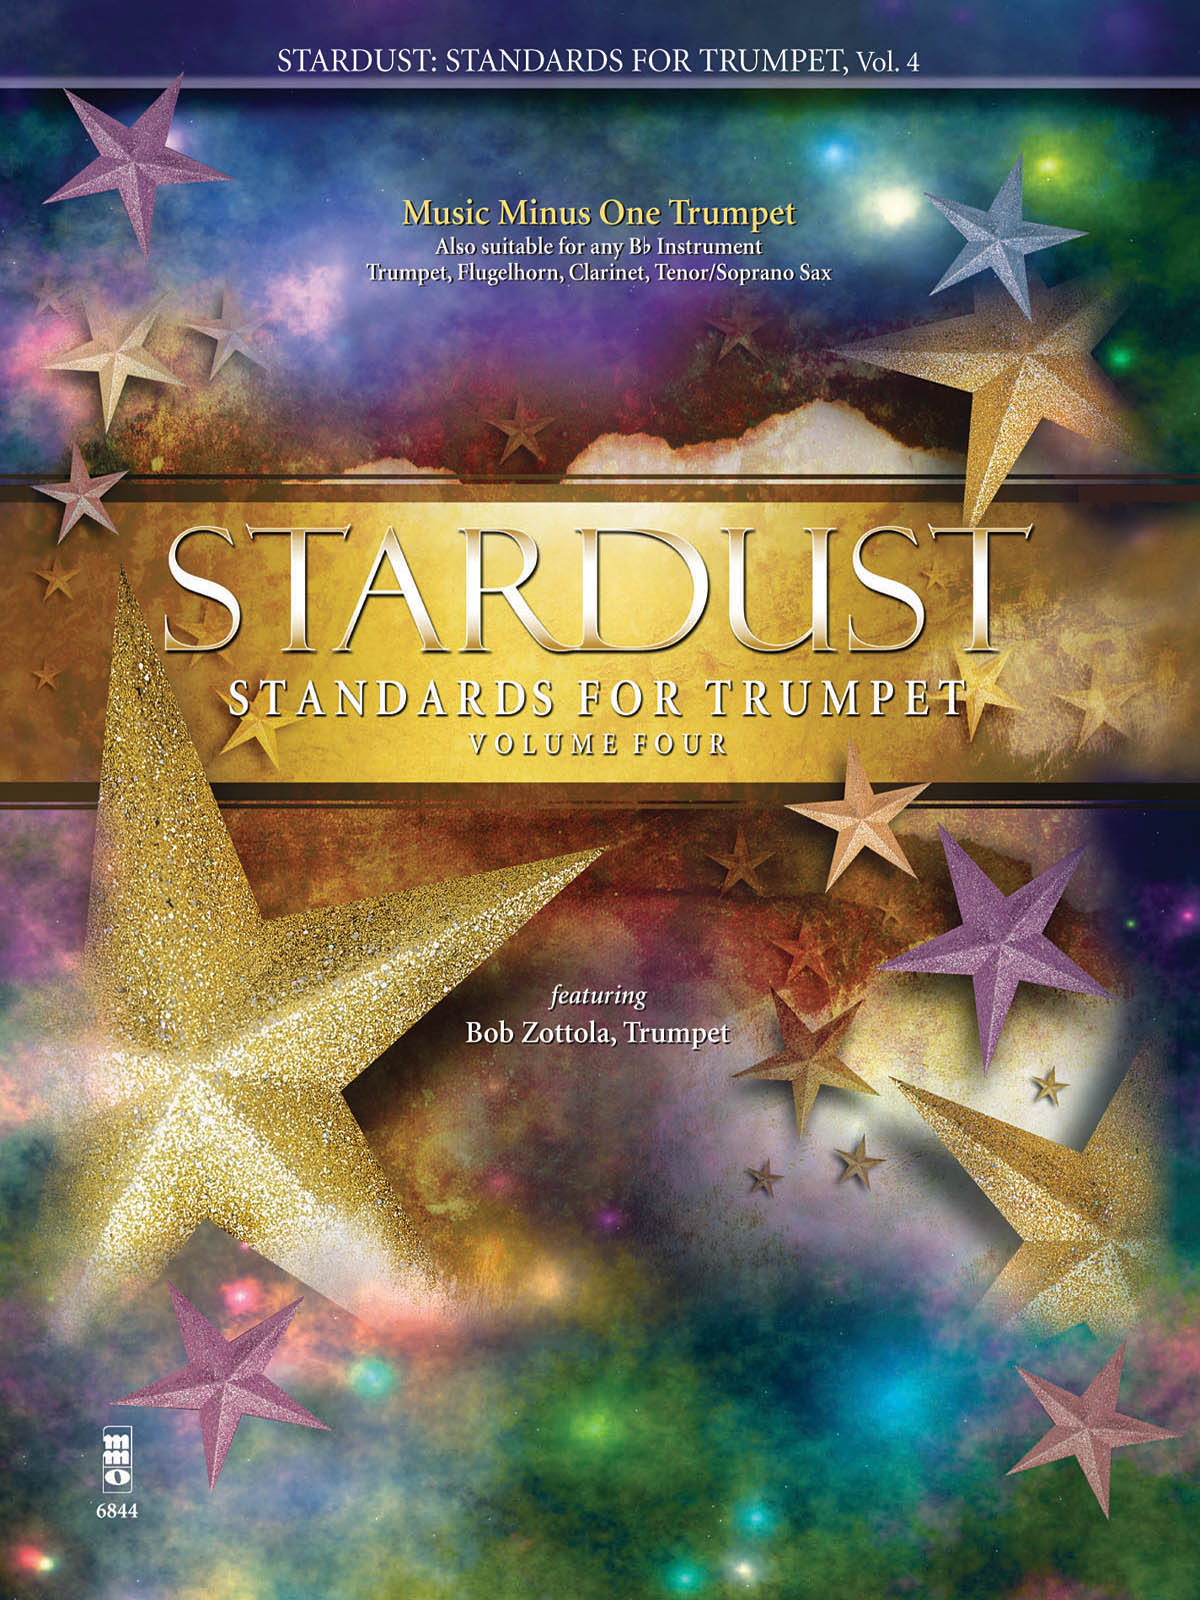 Stardust Standards for Trumpet - Vol. 4 - noty pro trumpetu